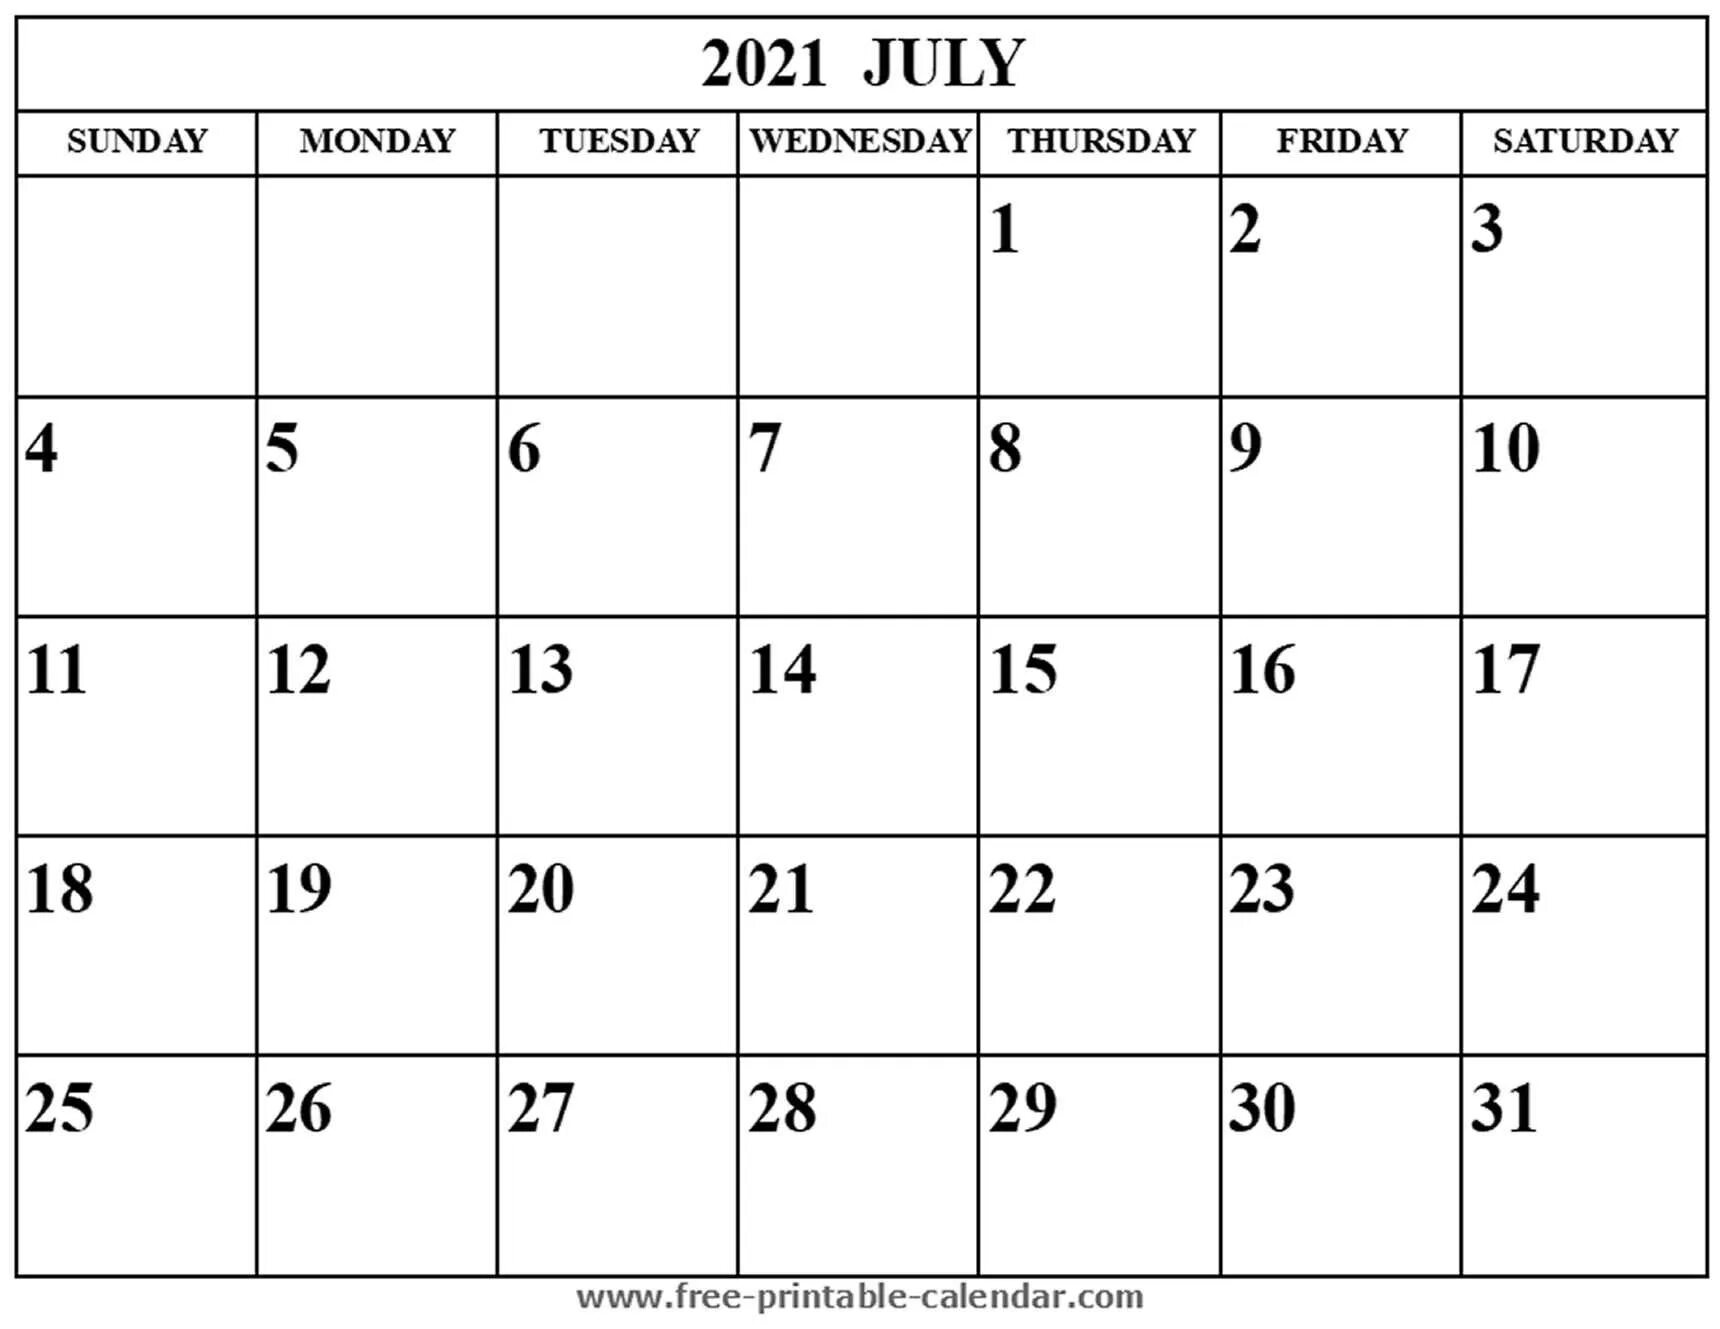 Август календарь для заметок. Август 2021 года календарь. Календарь август пустой. Календарь на август для записей. Календарь март 2016